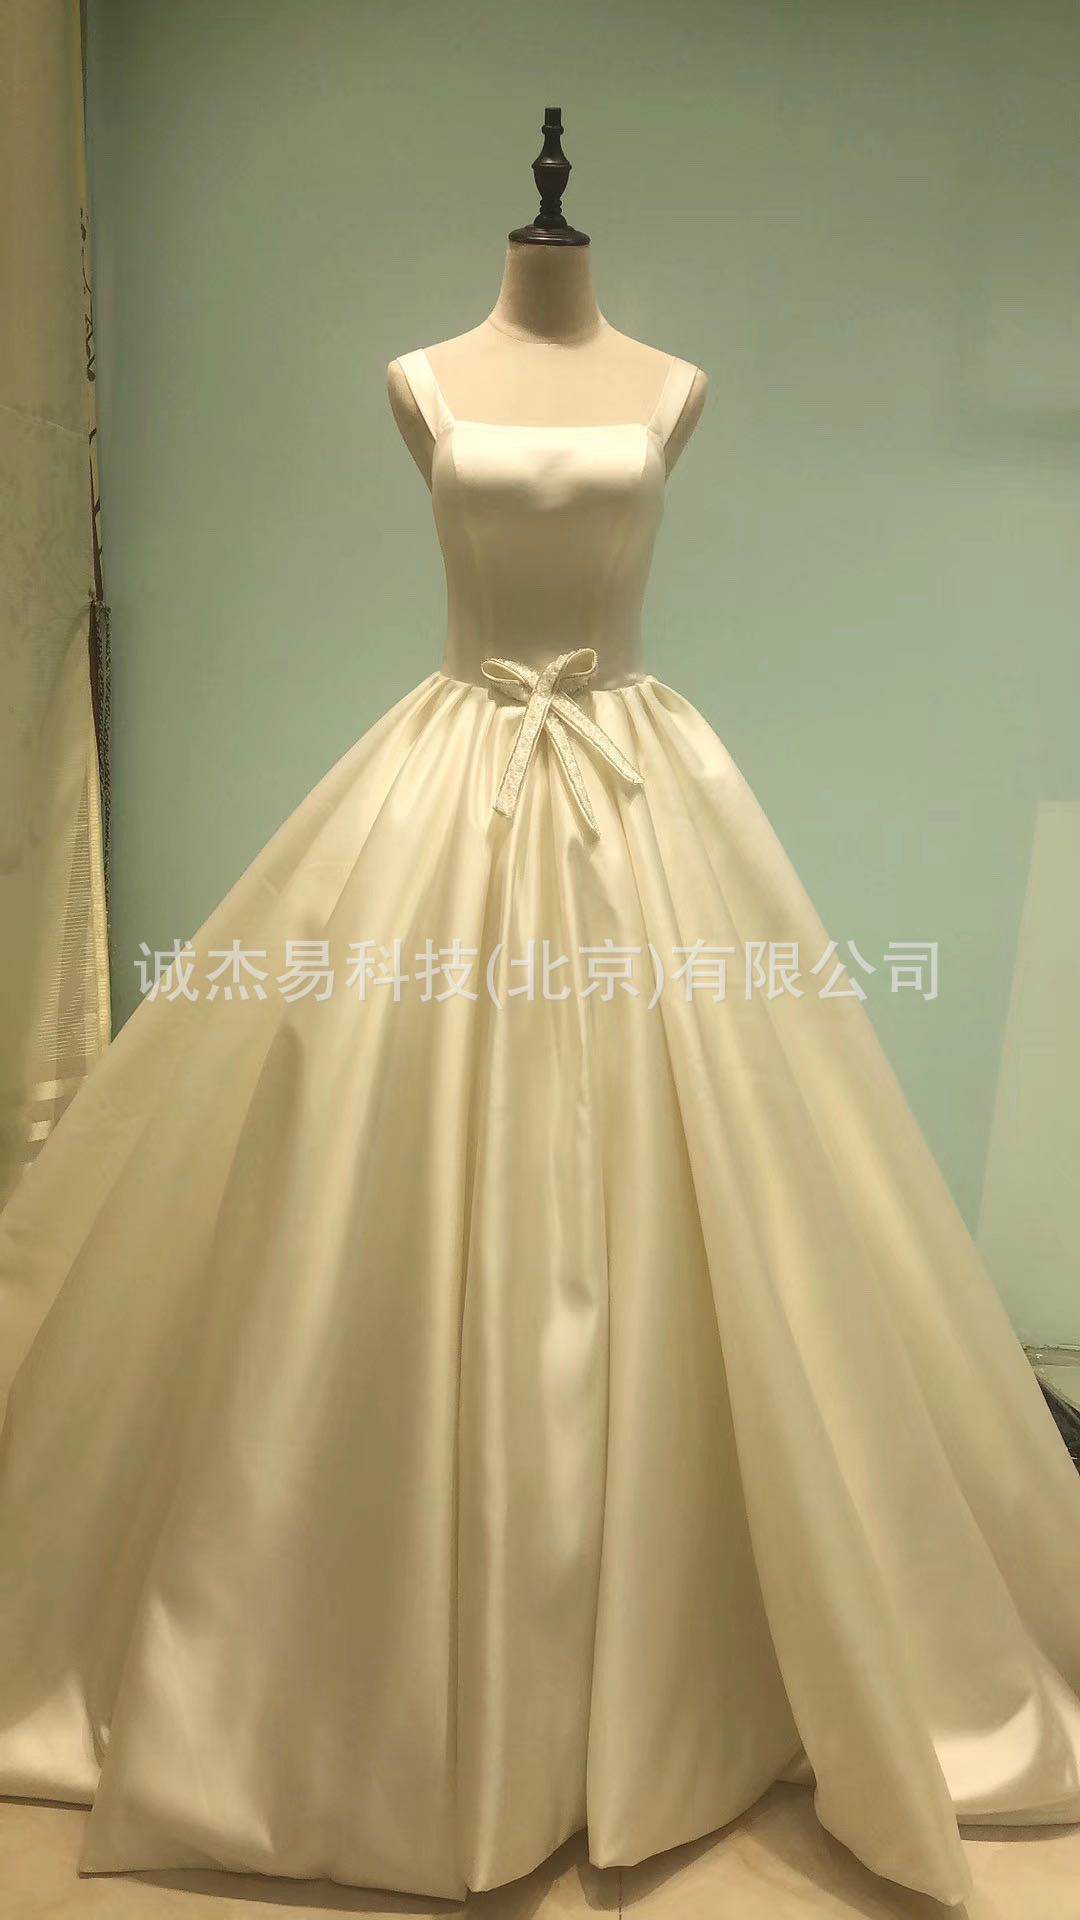 White wedding Gown, Loverxu Square Collar, Satin Wedding Dresses Elegant Tank Sleeve Bow Lace Bride Dress Chapel Train